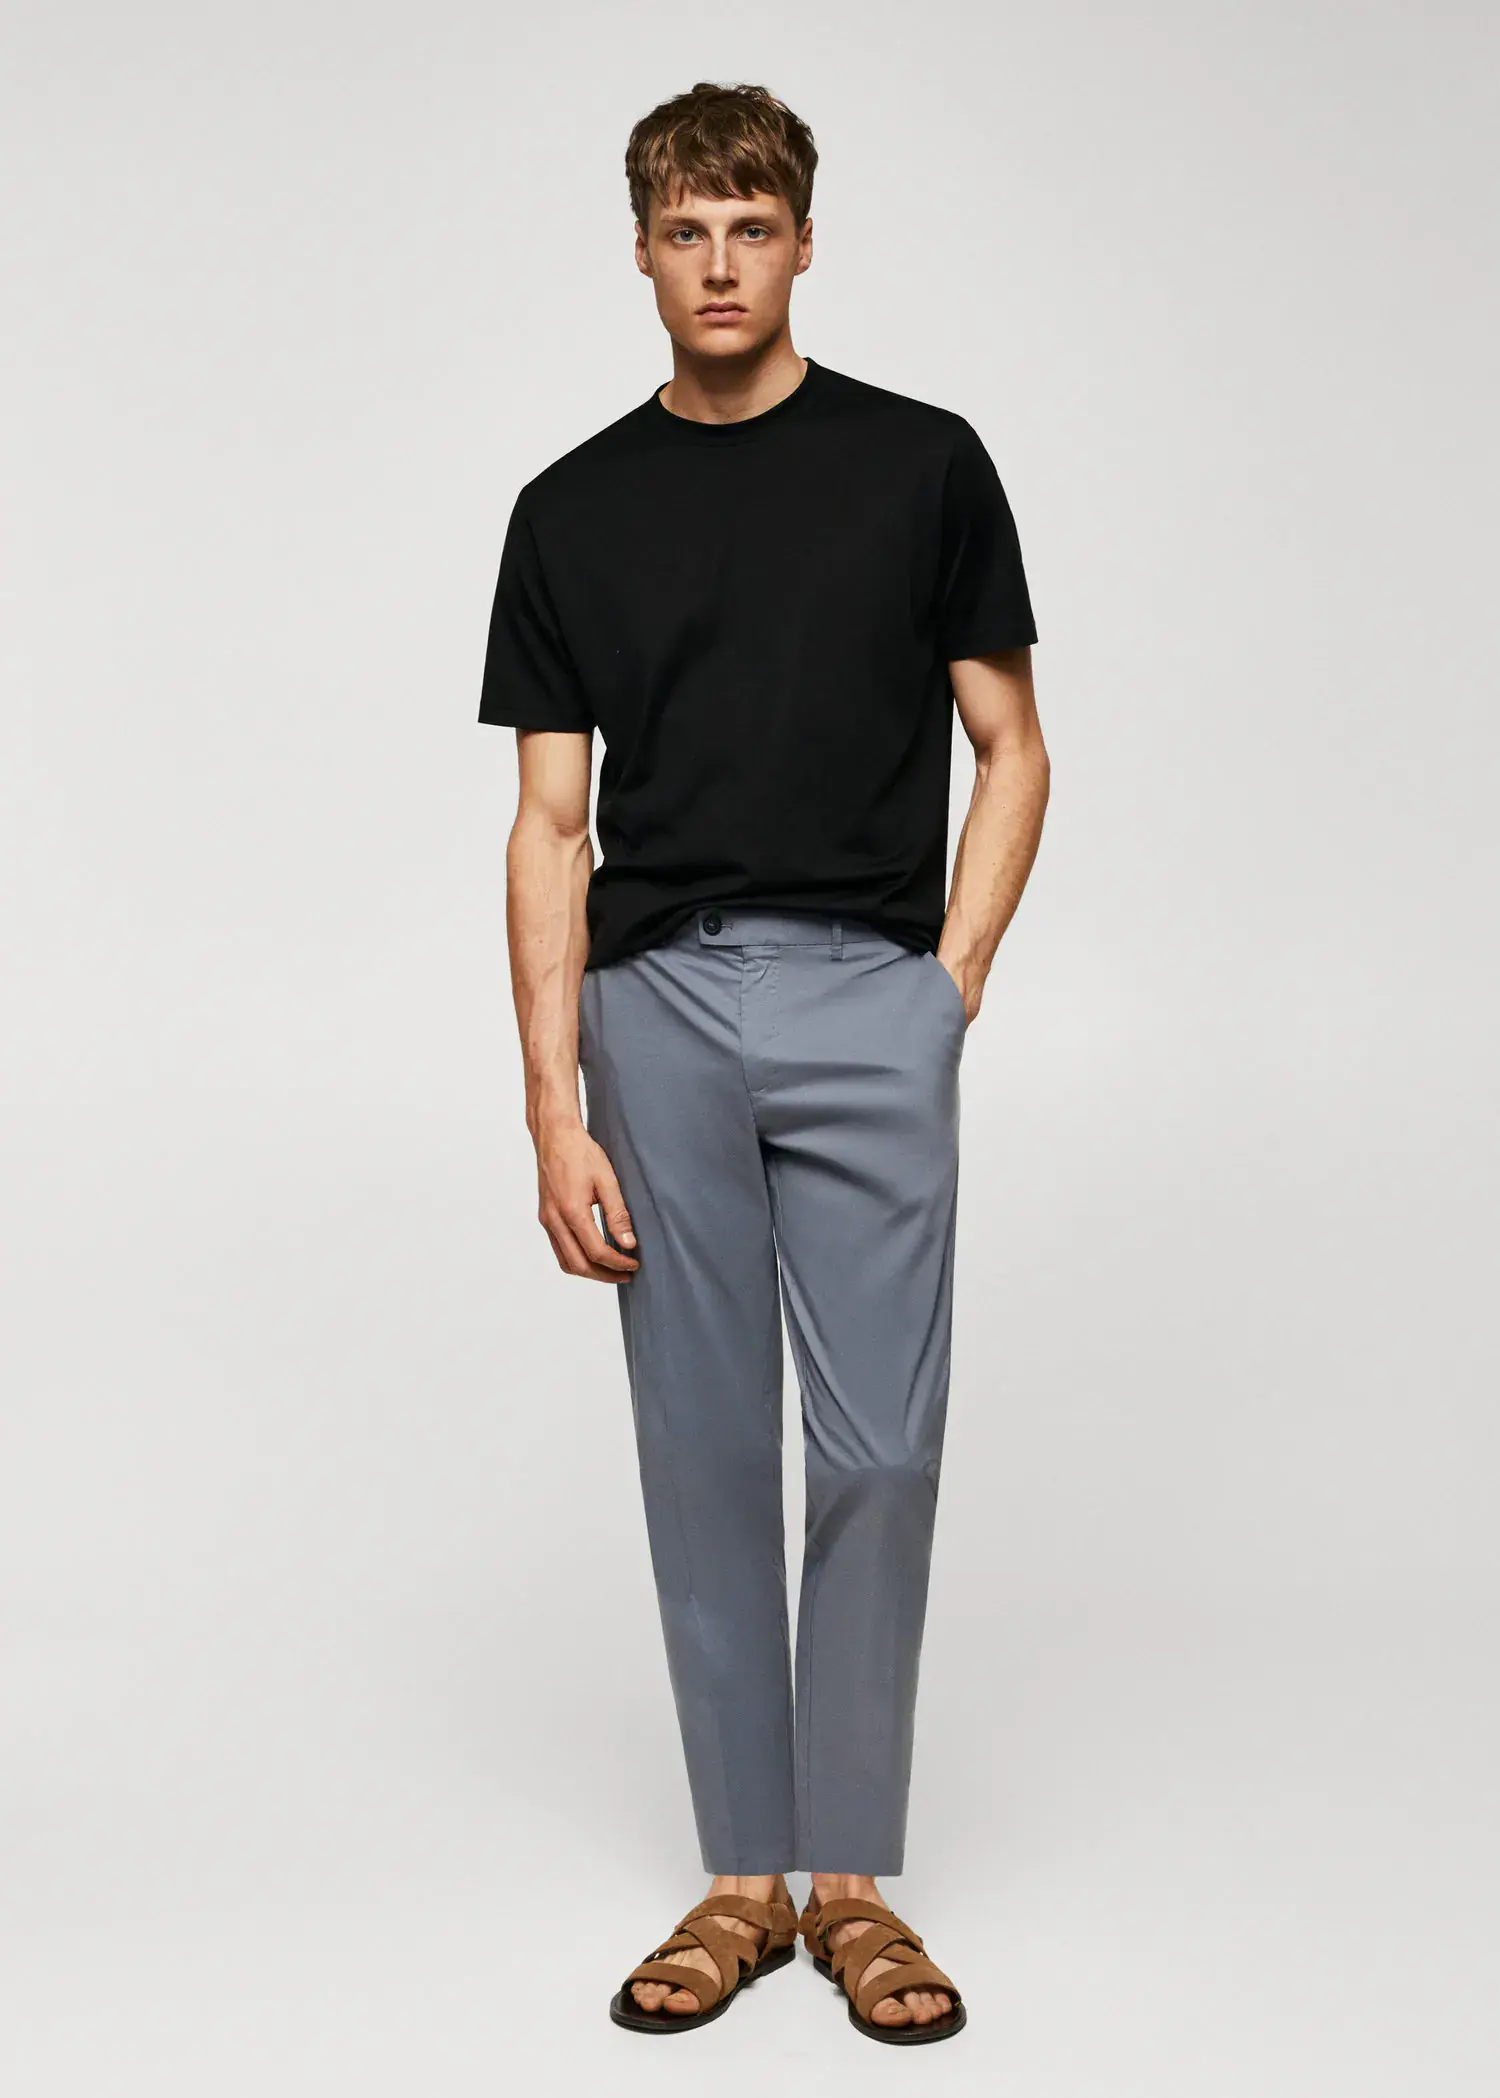 Mango Mercerized regular-fit t-shirt. a man in a black shirt and gray pants. 